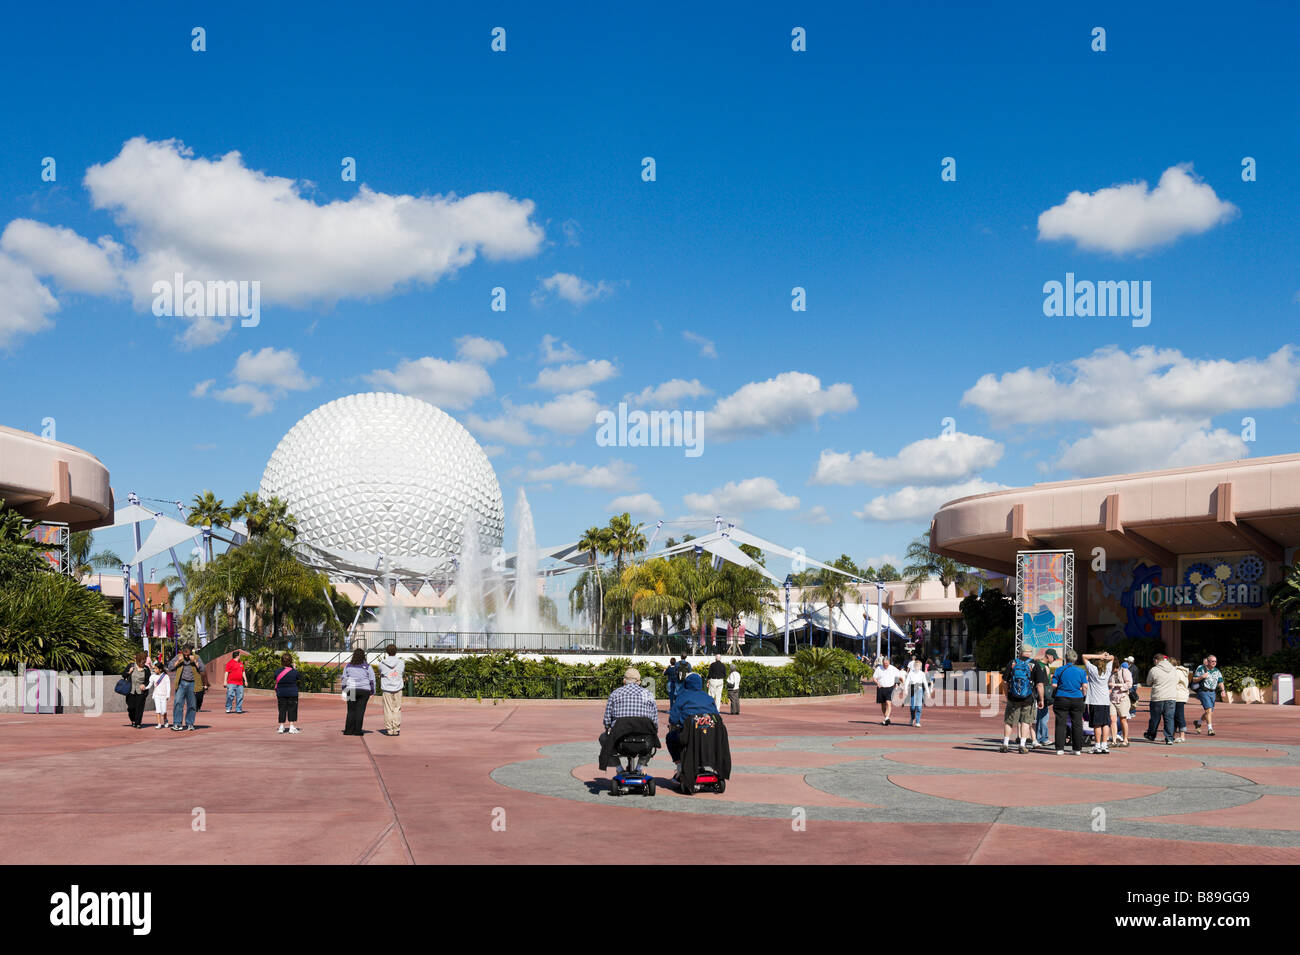 The geodesic sphere of Spaceship Earth, Epcot Center, Walt Disney World Resort, Lake Buena Vista, Orlando, Florida, USA Stock Photo